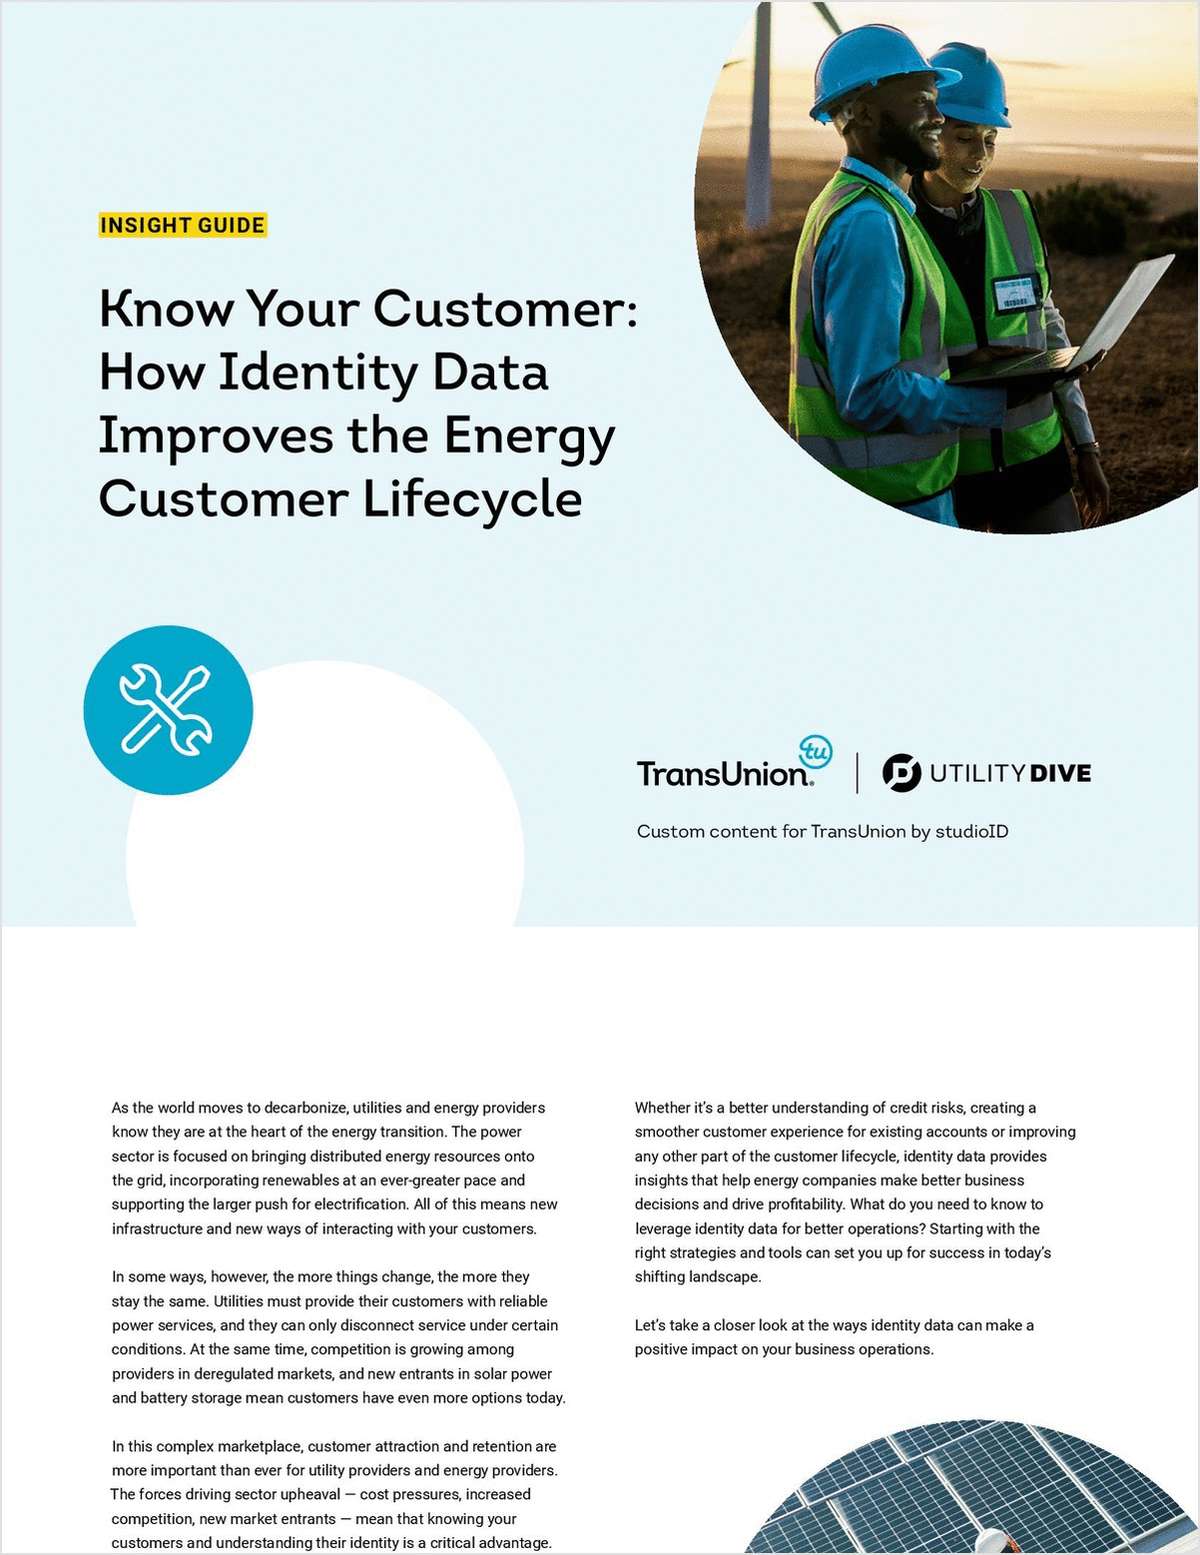 3 Ways Identity Data Makes a Positive Impact on Utilities